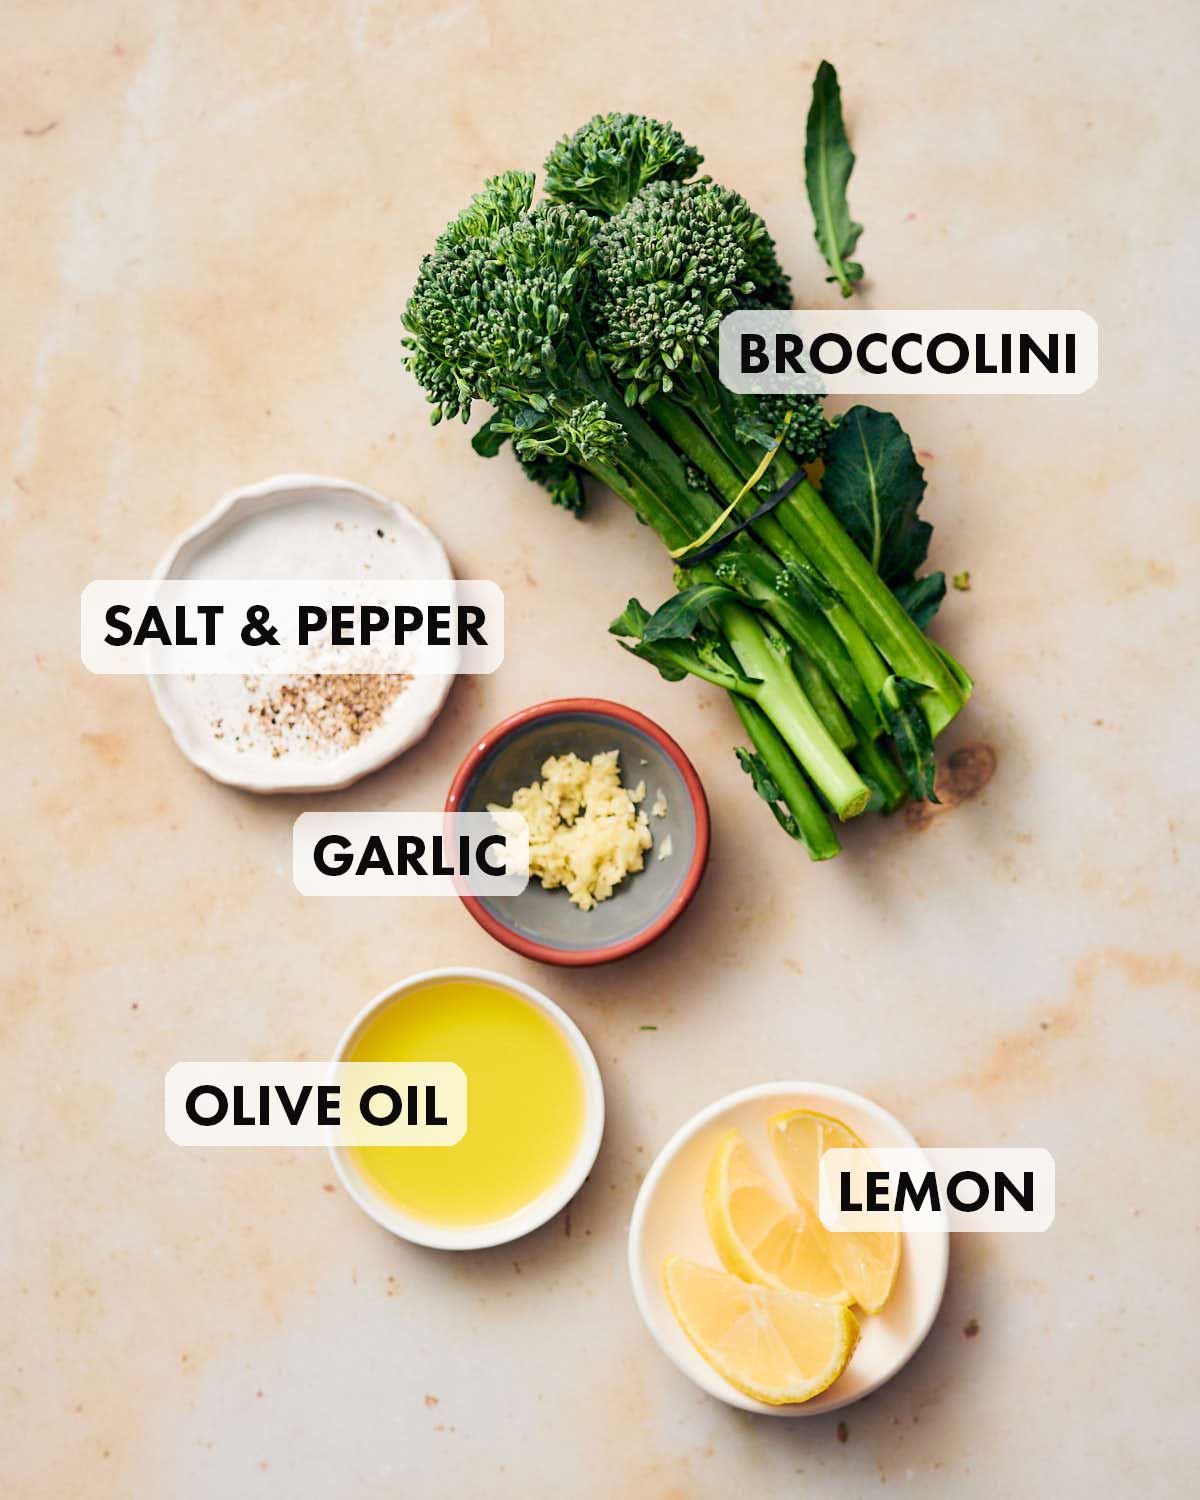 Ingredients to make vegan air fryer broccolini.